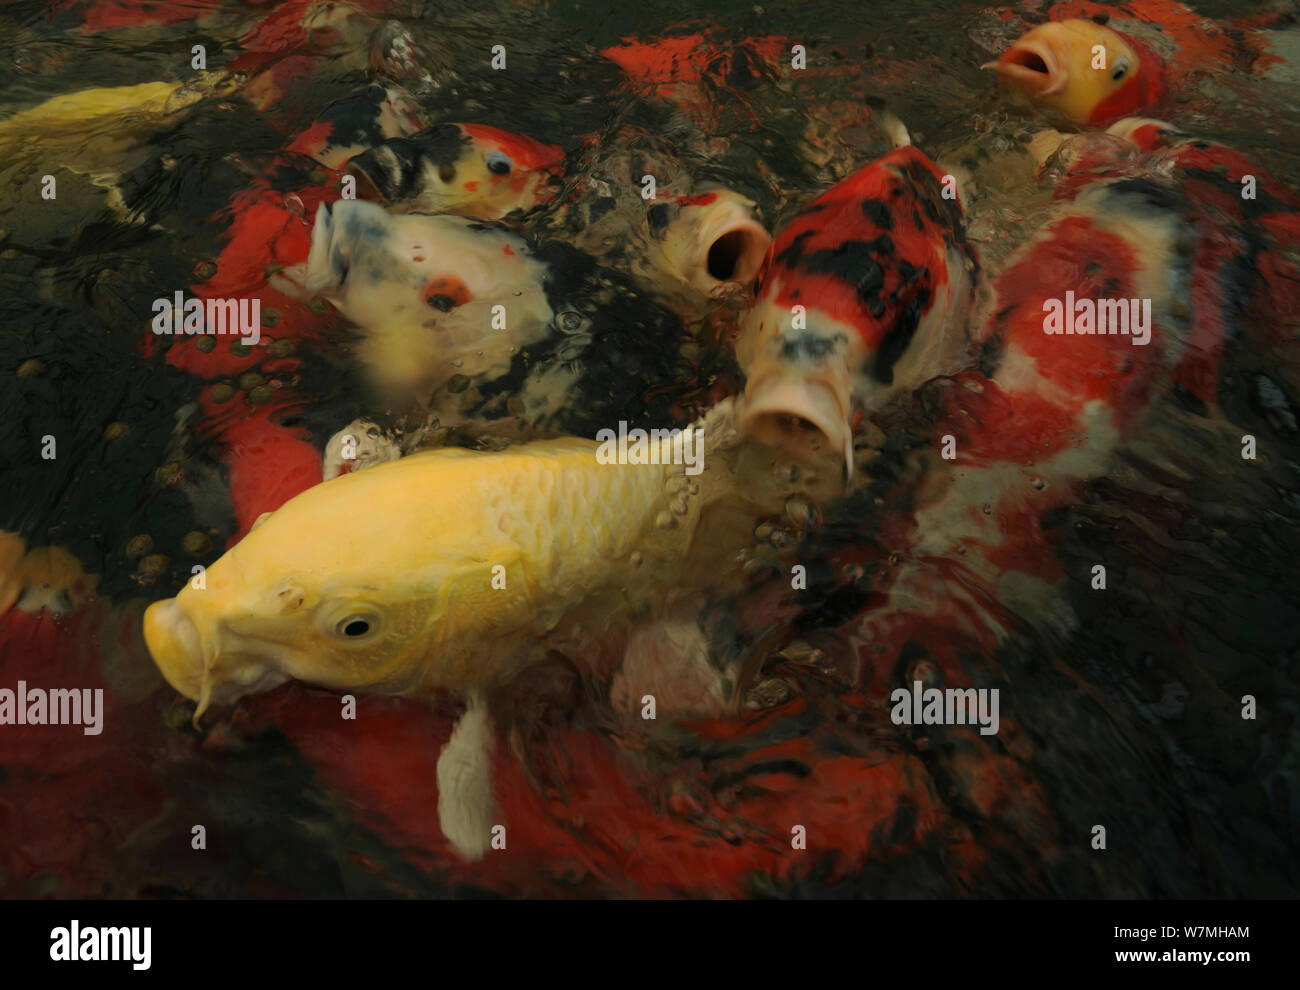 Variegated carp (Cyprinus carpio) group at the surface of pond, Beijing, China. Stock Photo